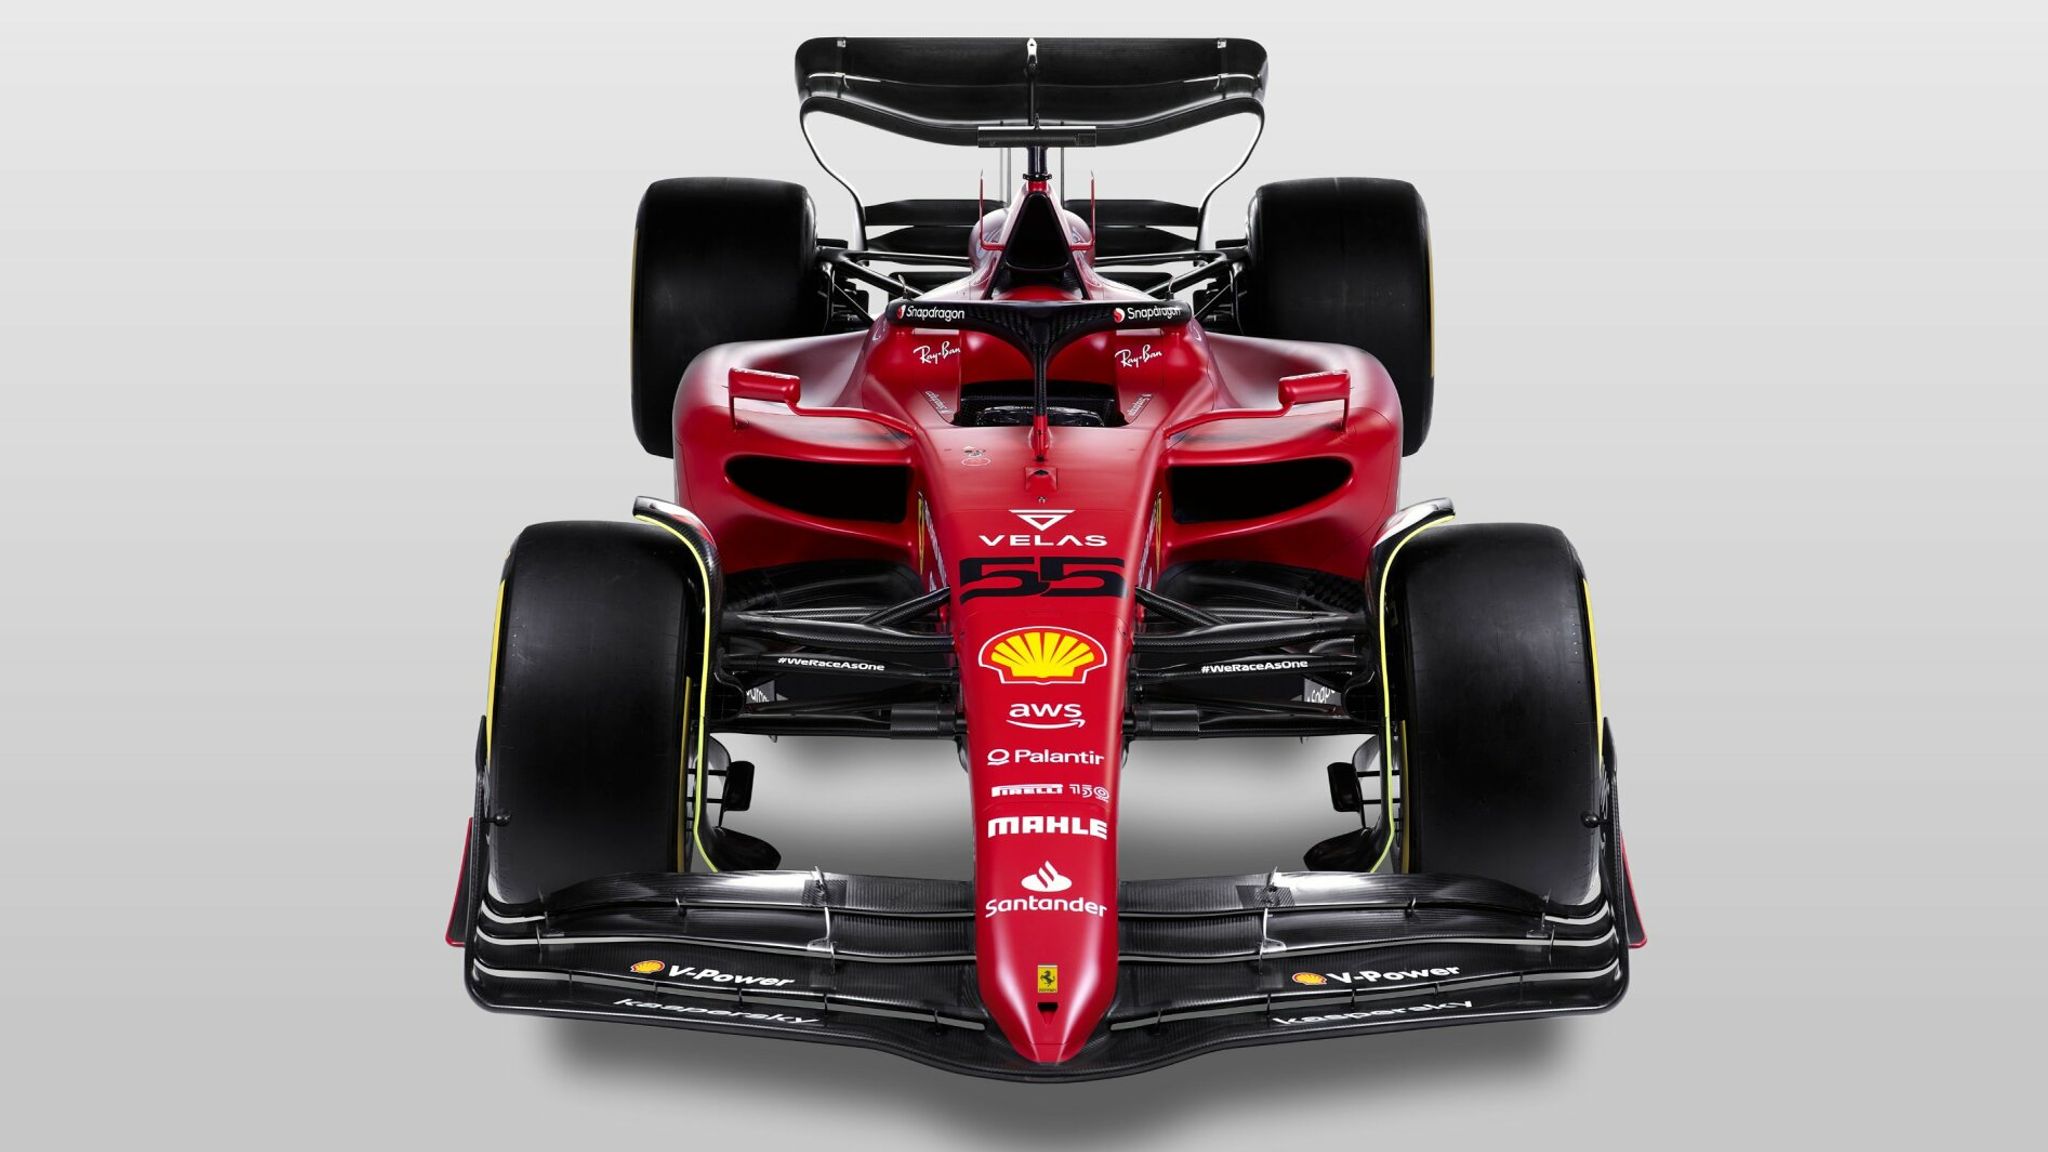 Ferrari reveal fierce new car for 2022 Formula 1 season as